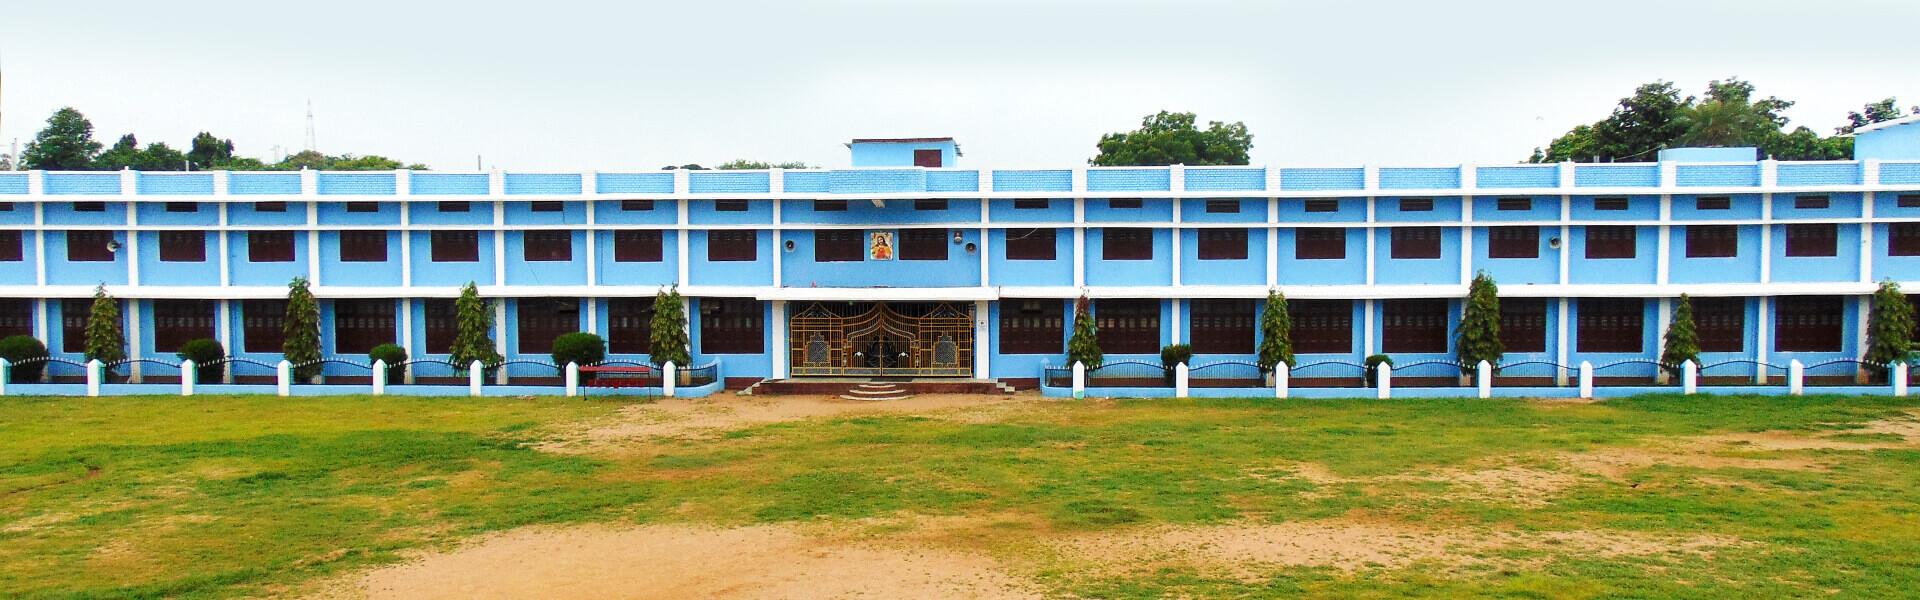 GCM School Nowgong